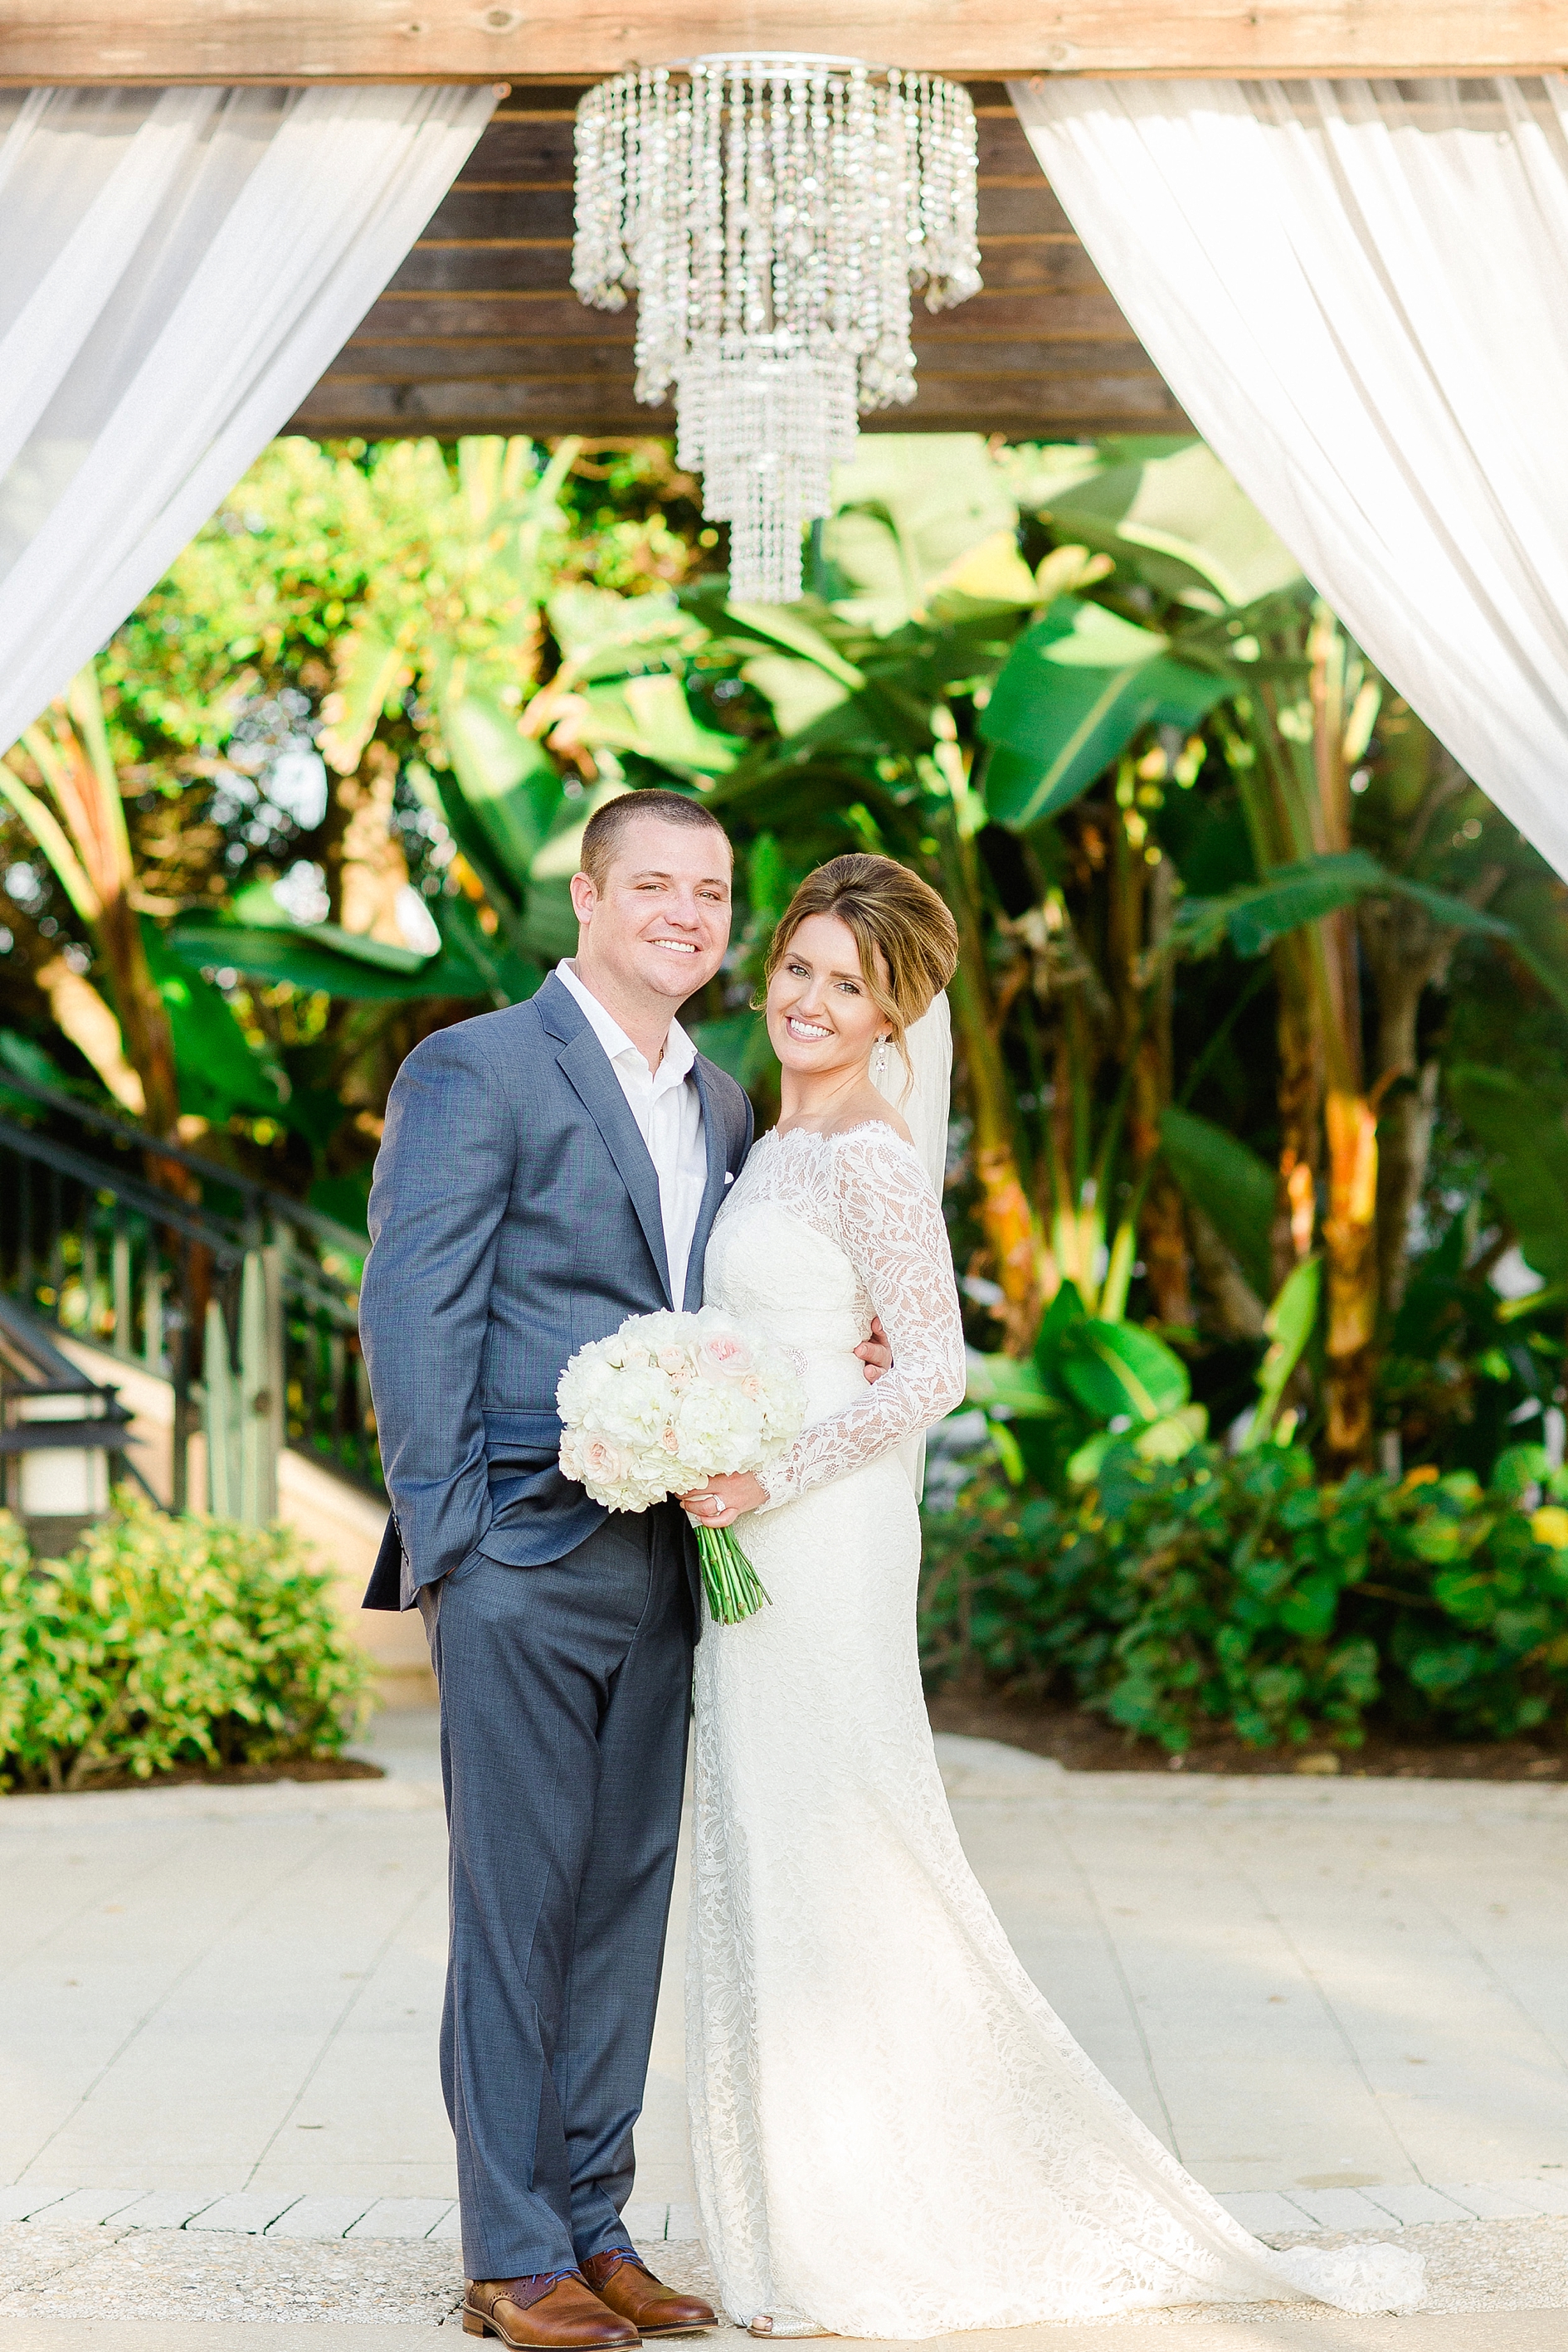 Ritz Carlton Sarasota Wedding | © Ailyn La Torre Photography 2015